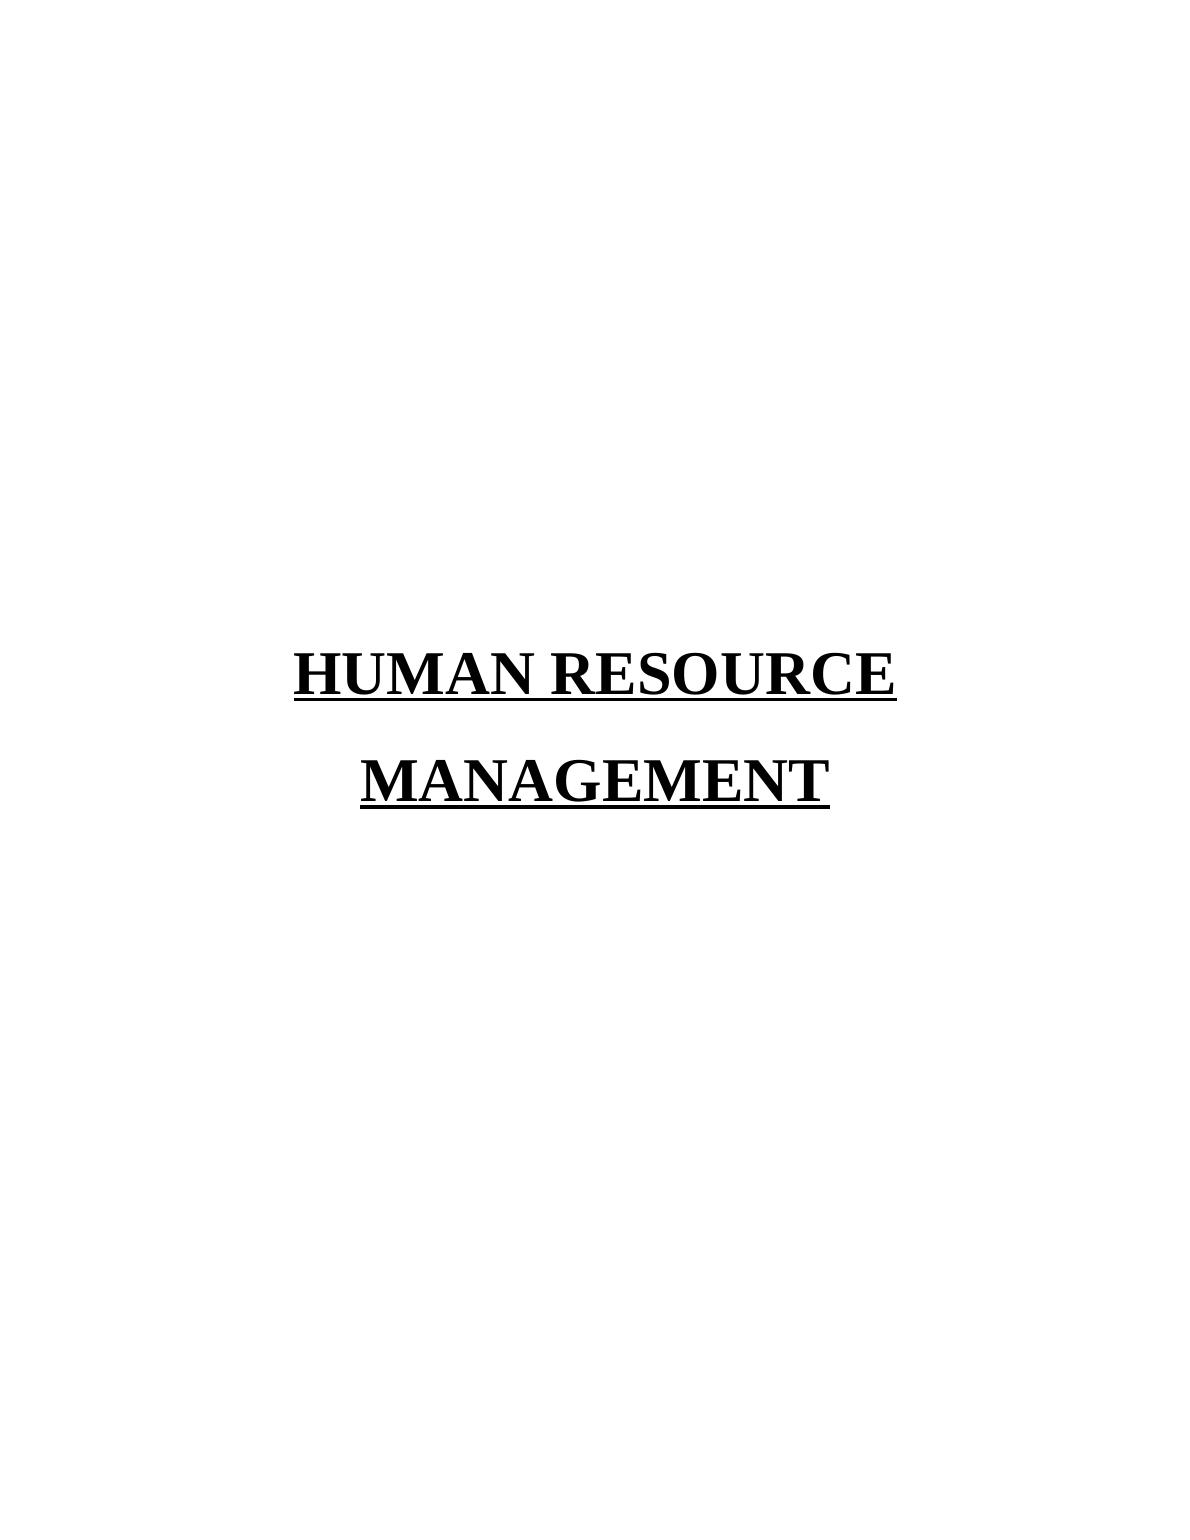 Human Resource Management - P1 Purpose and Scope_1